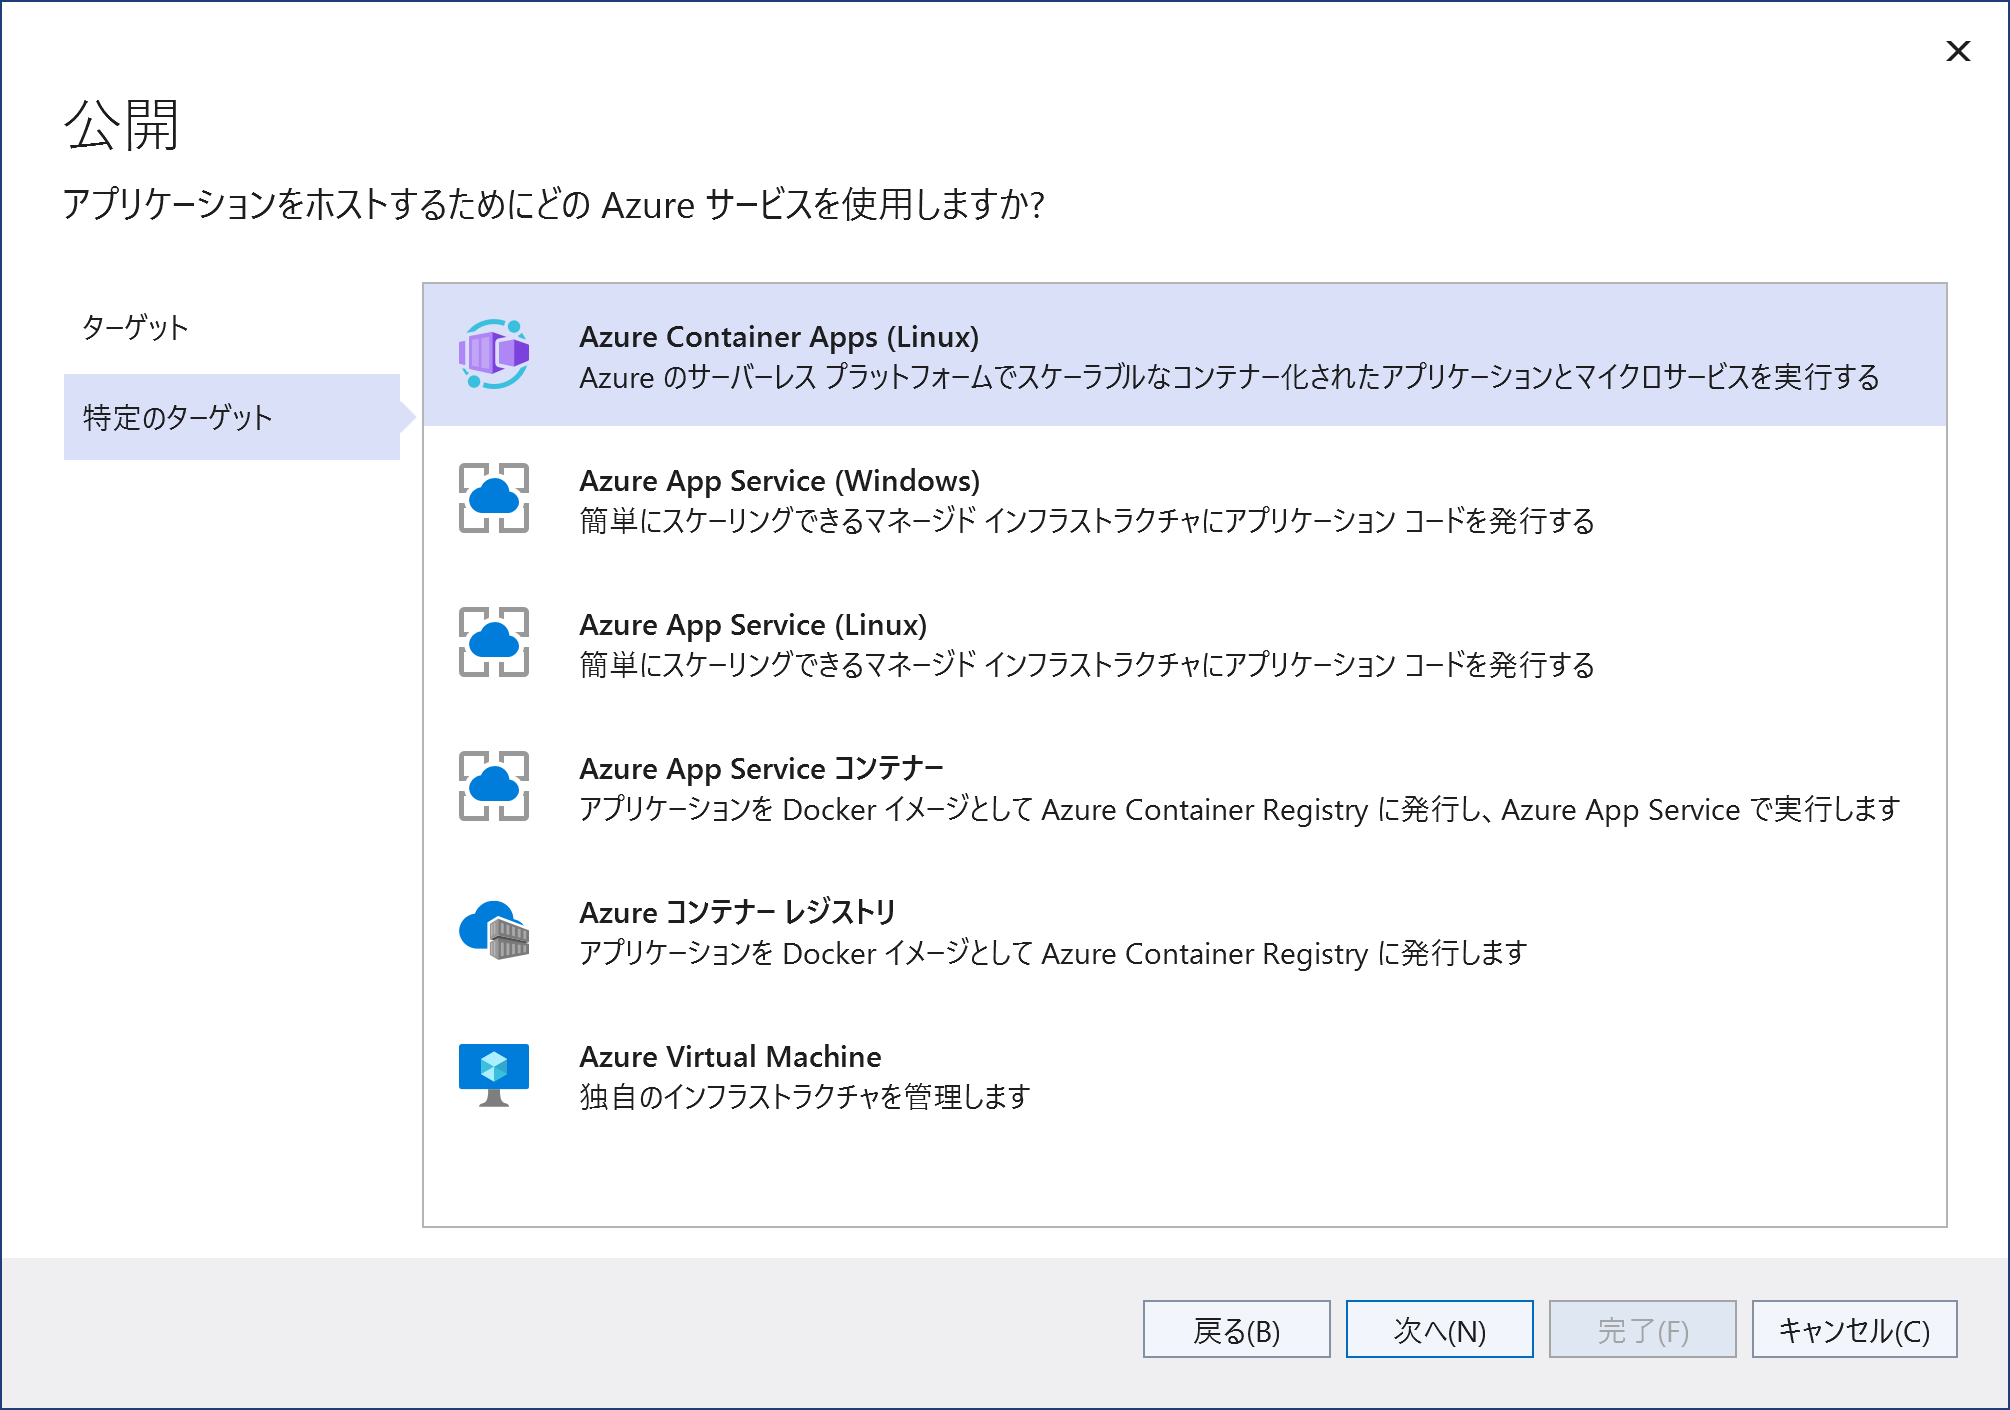 Azure Container Appsにデプロイして確認（1）